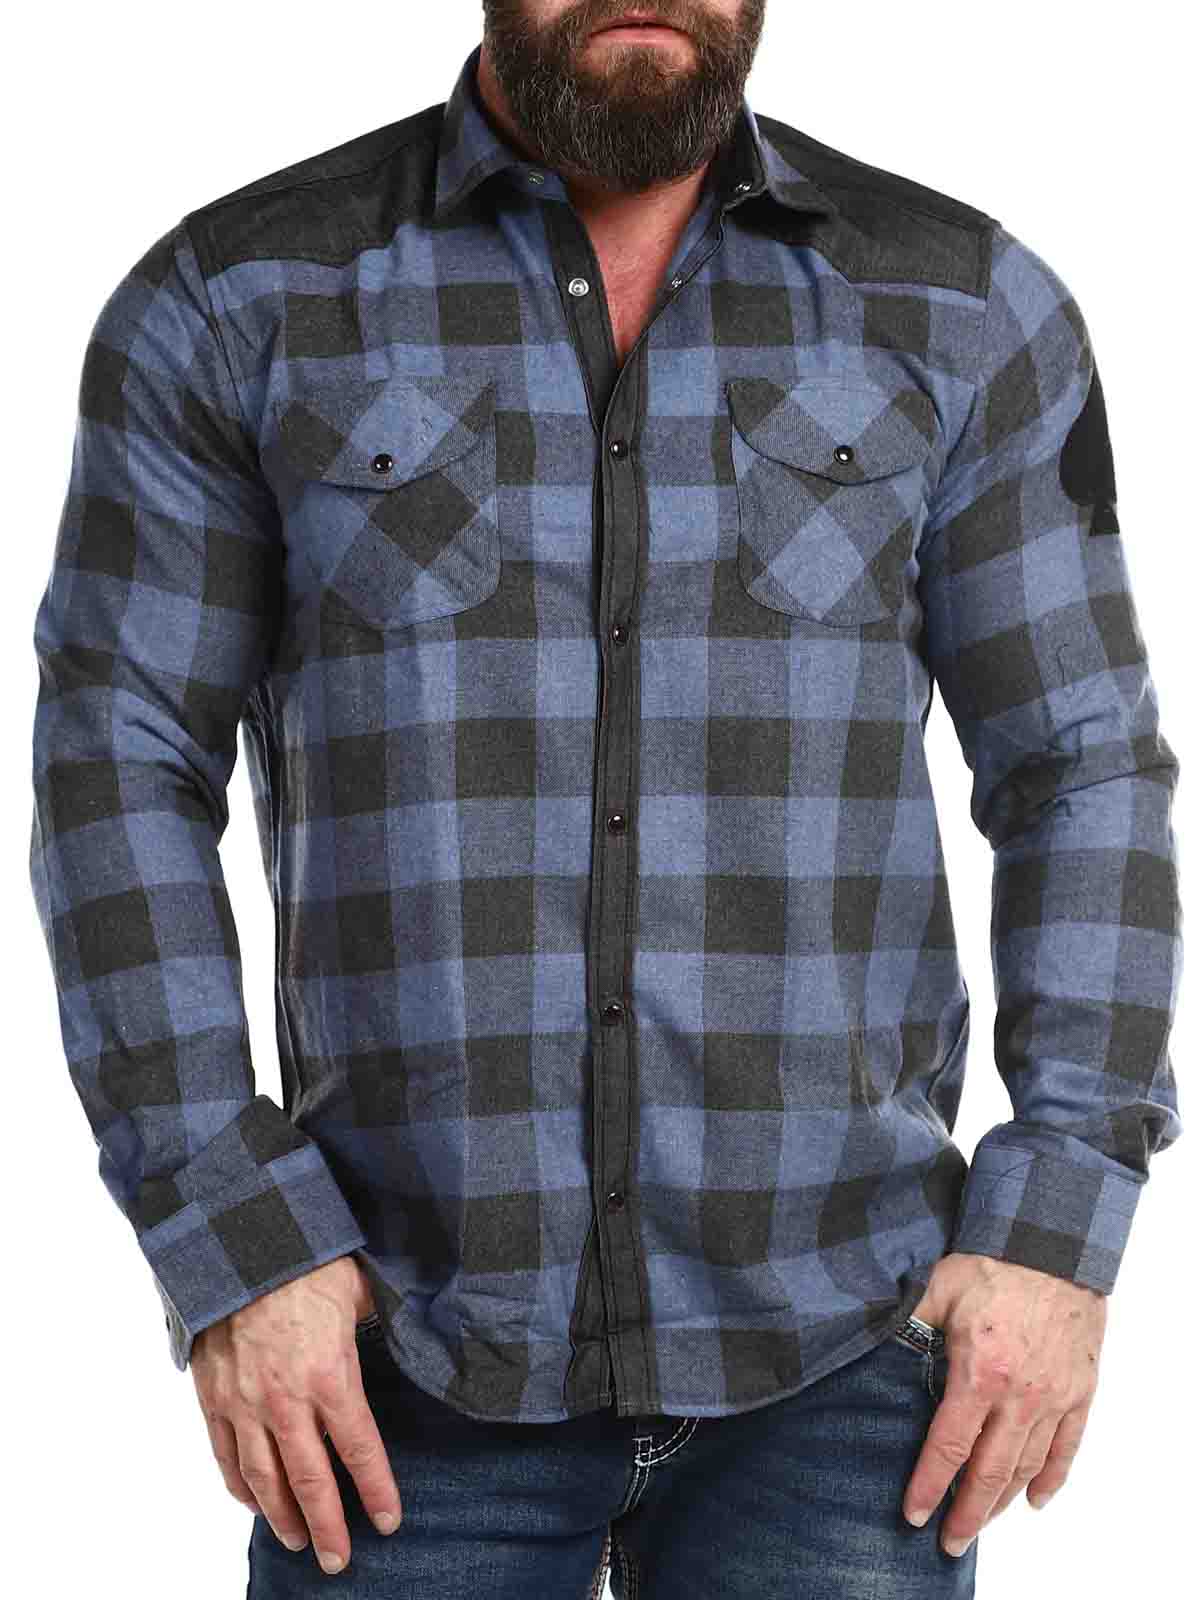 RD Lumberjack Shirt1.jpg